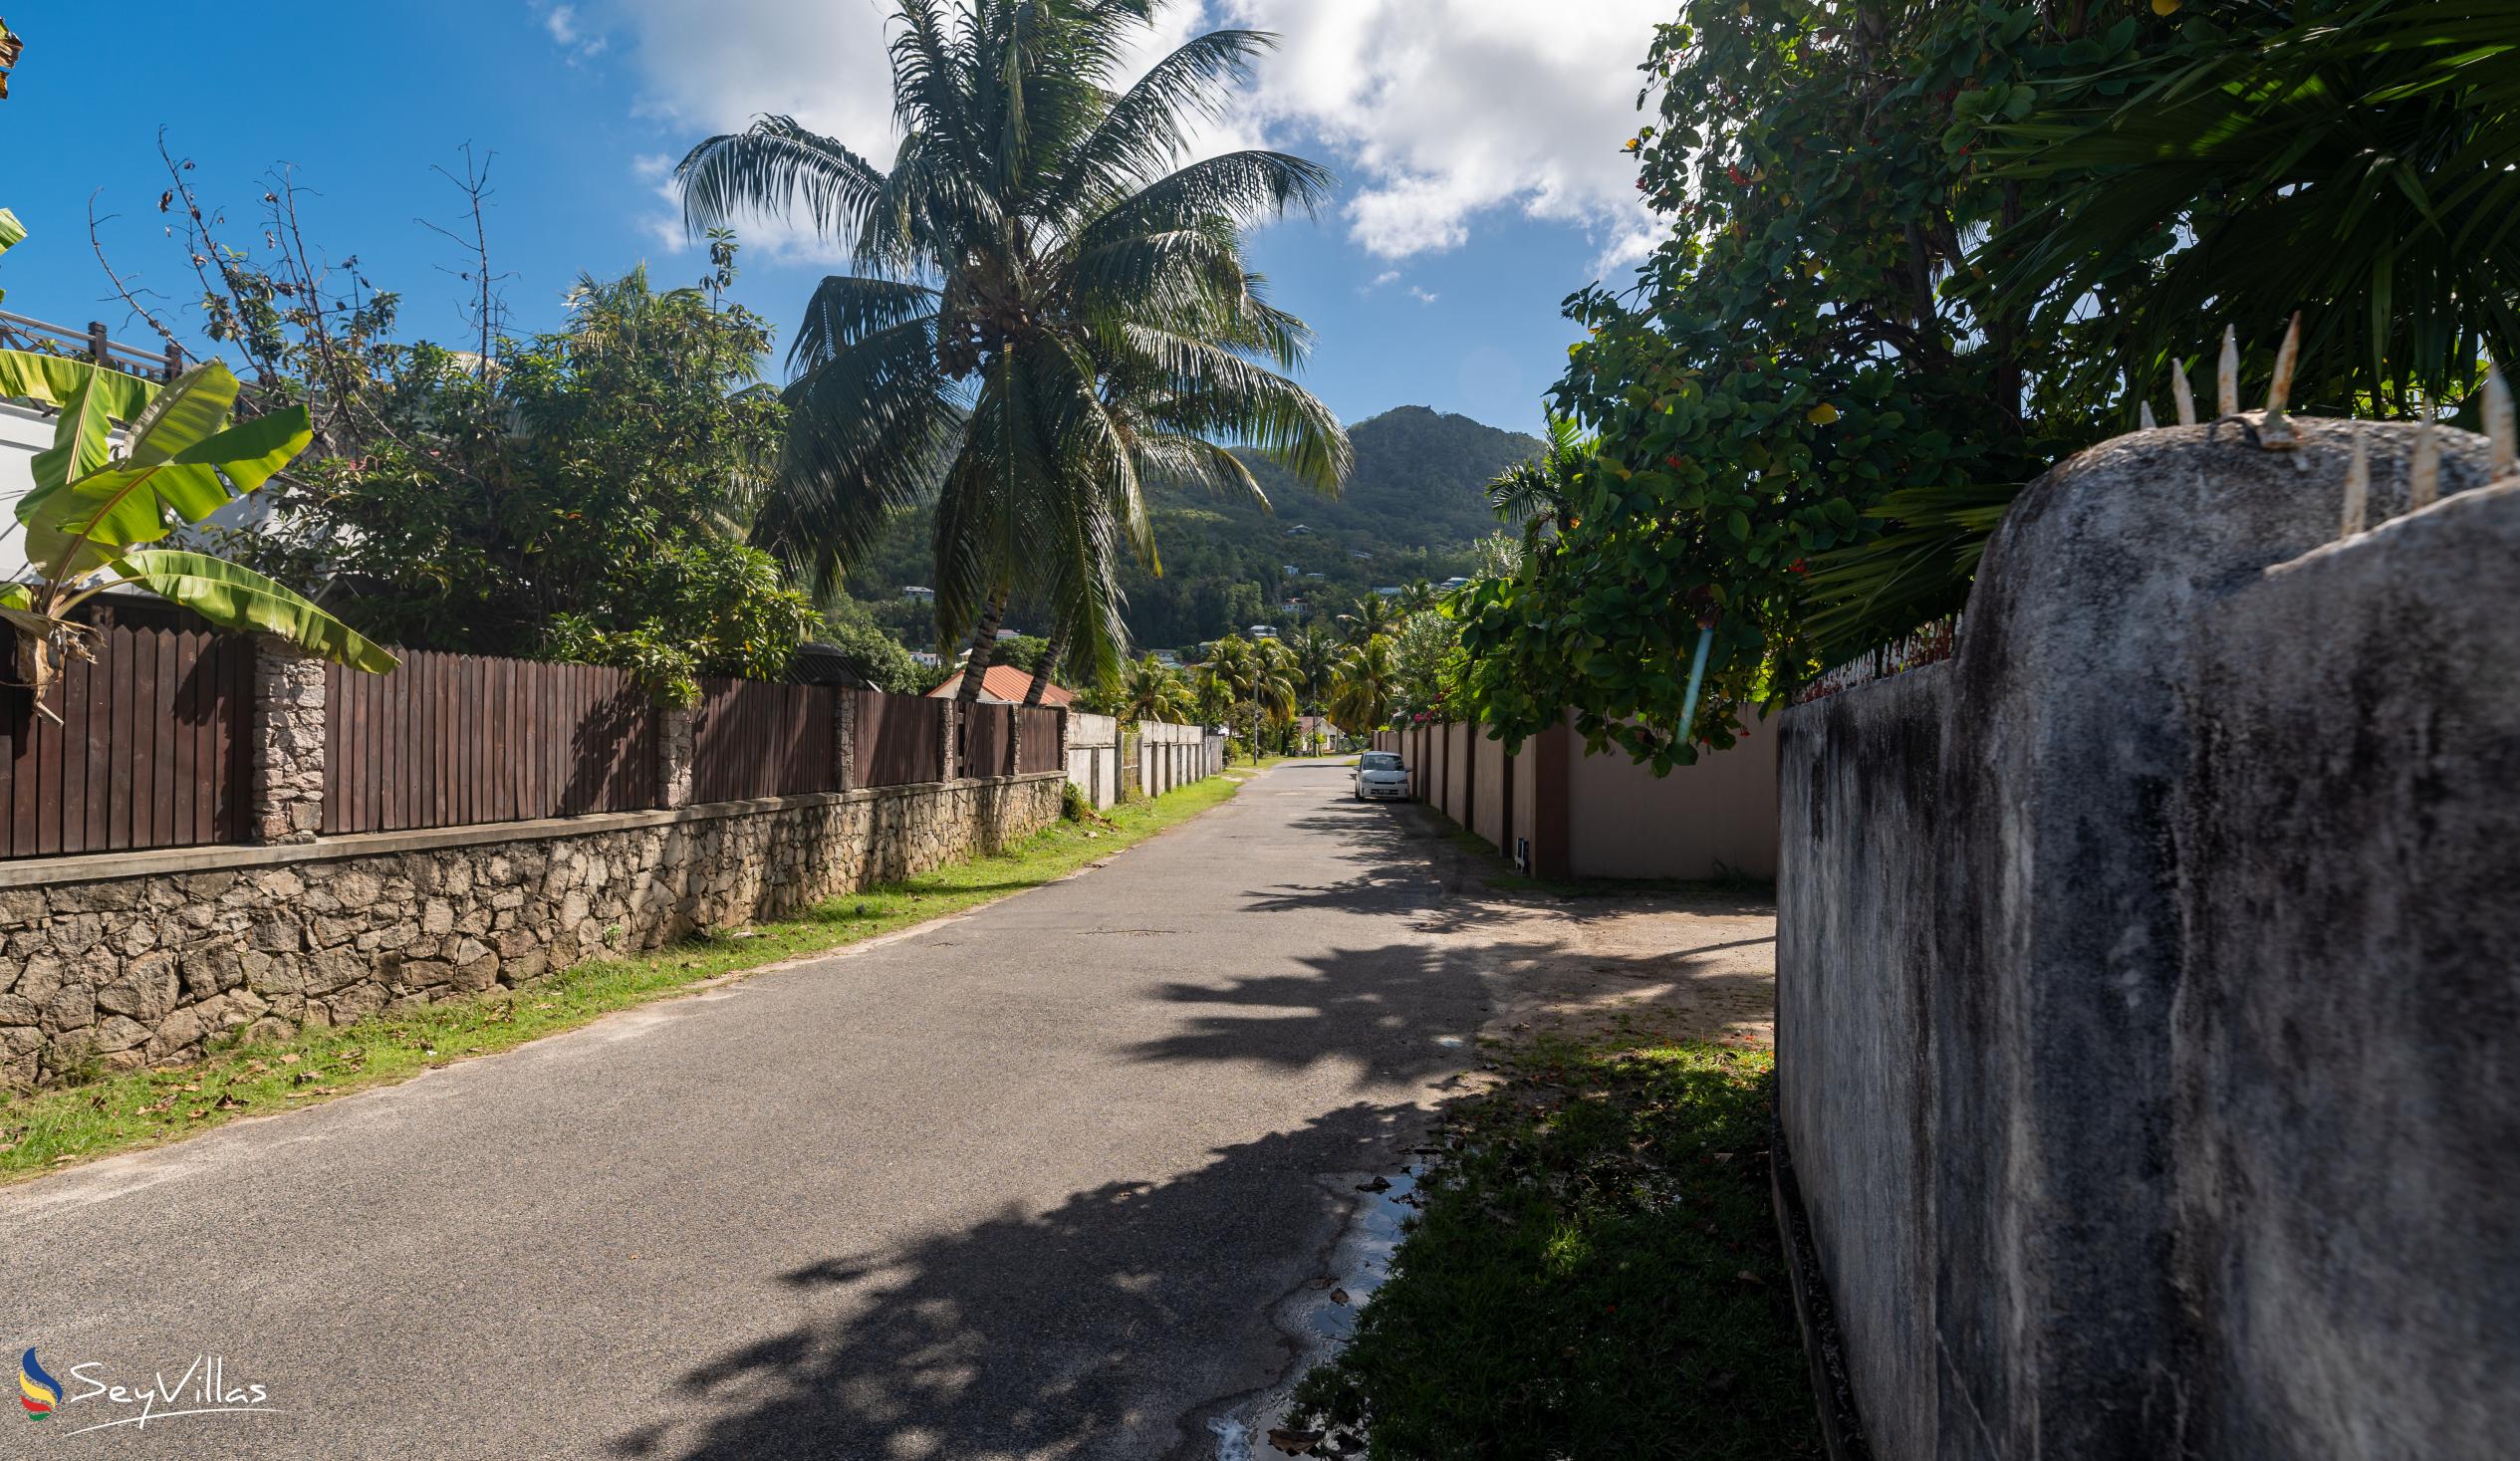 Foto 44: Villa Caballero - Lage - Mahé (Seychellen)